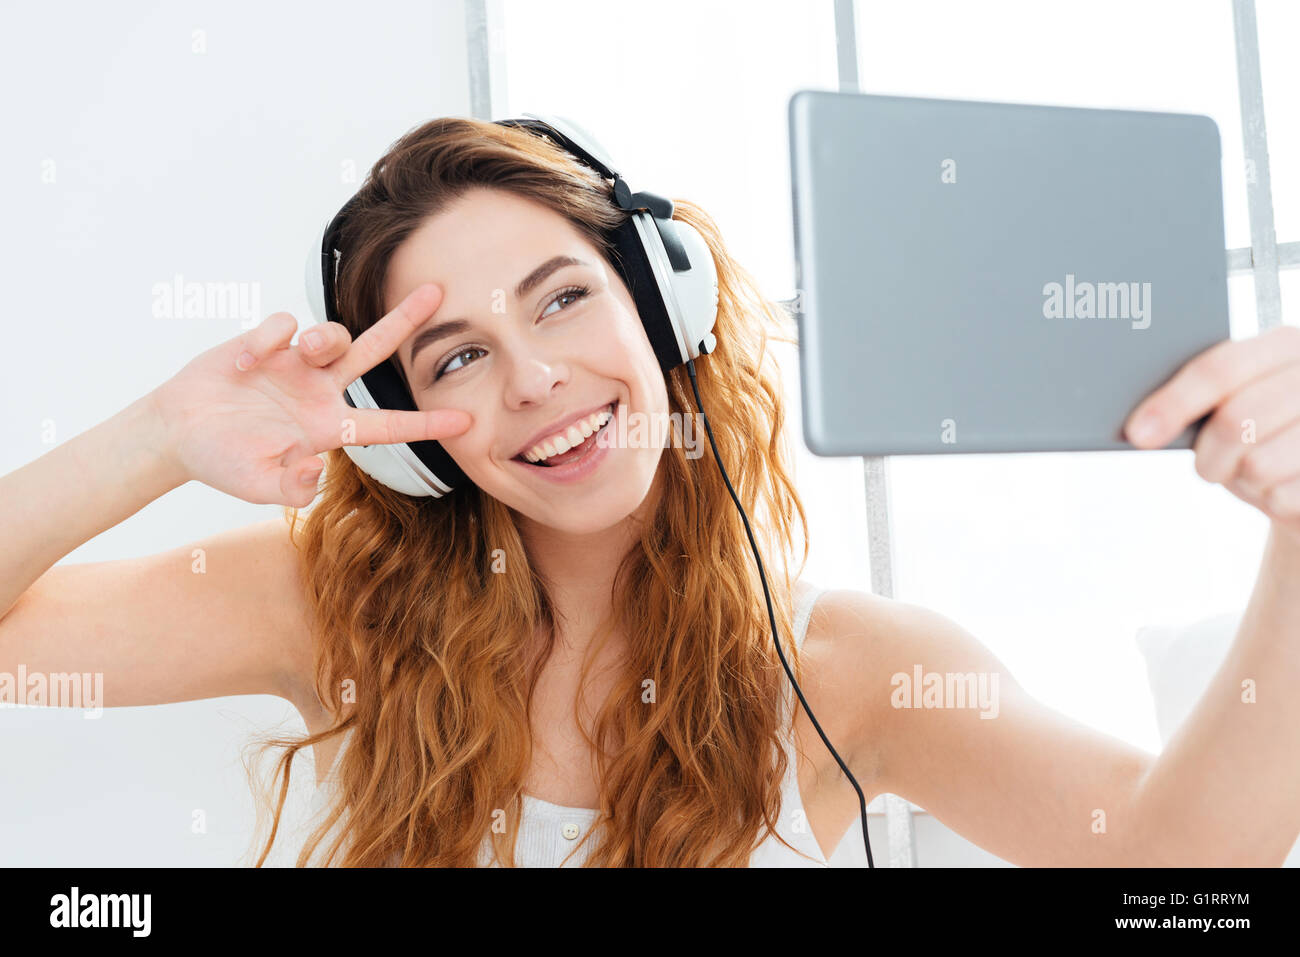 Happy woman in headphones décisions photo selfies sur tablet computer at home Banque D'Images